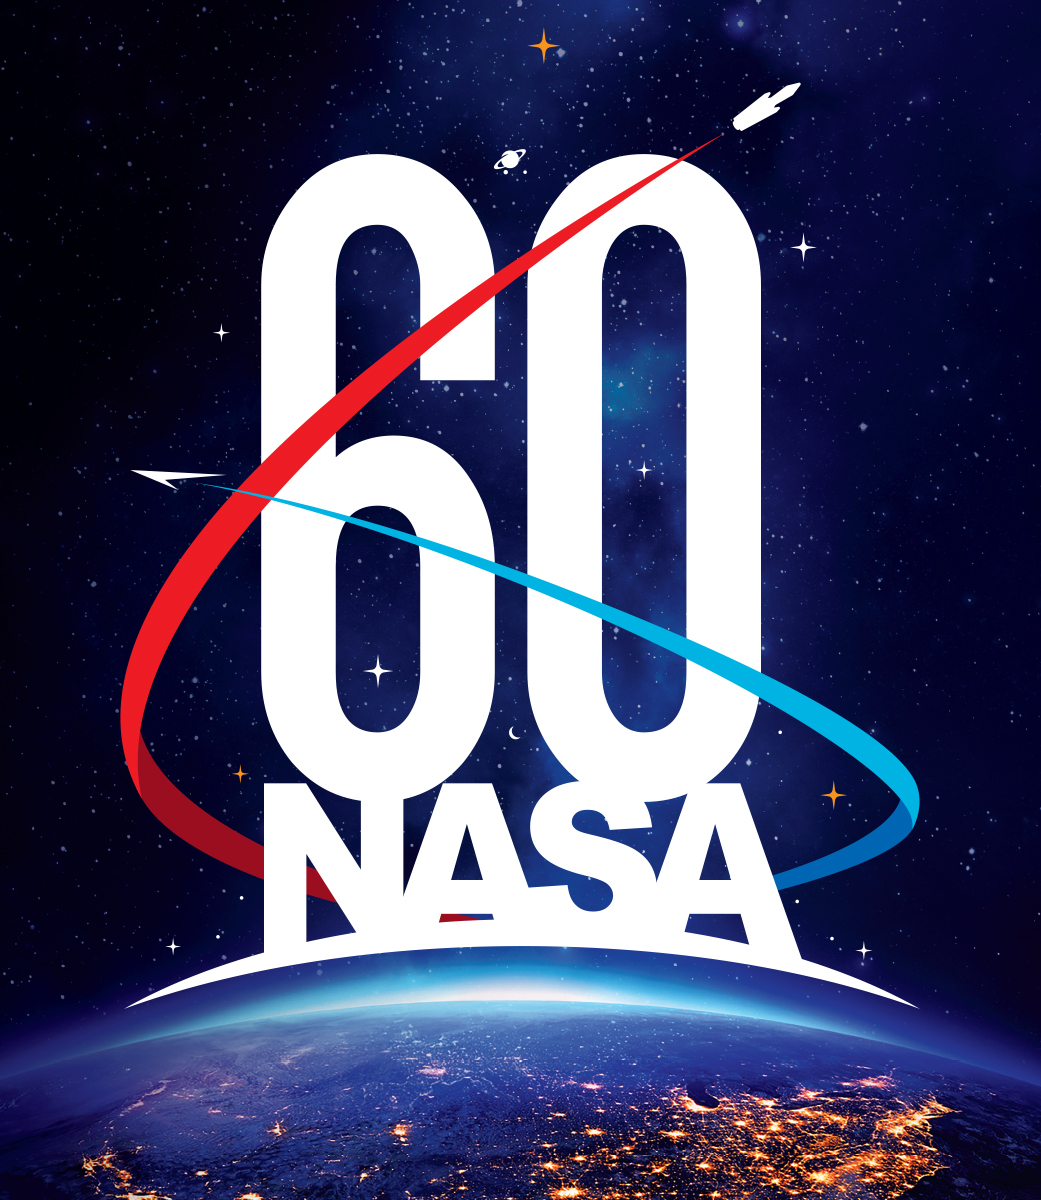 NASA 60th anniversary logo